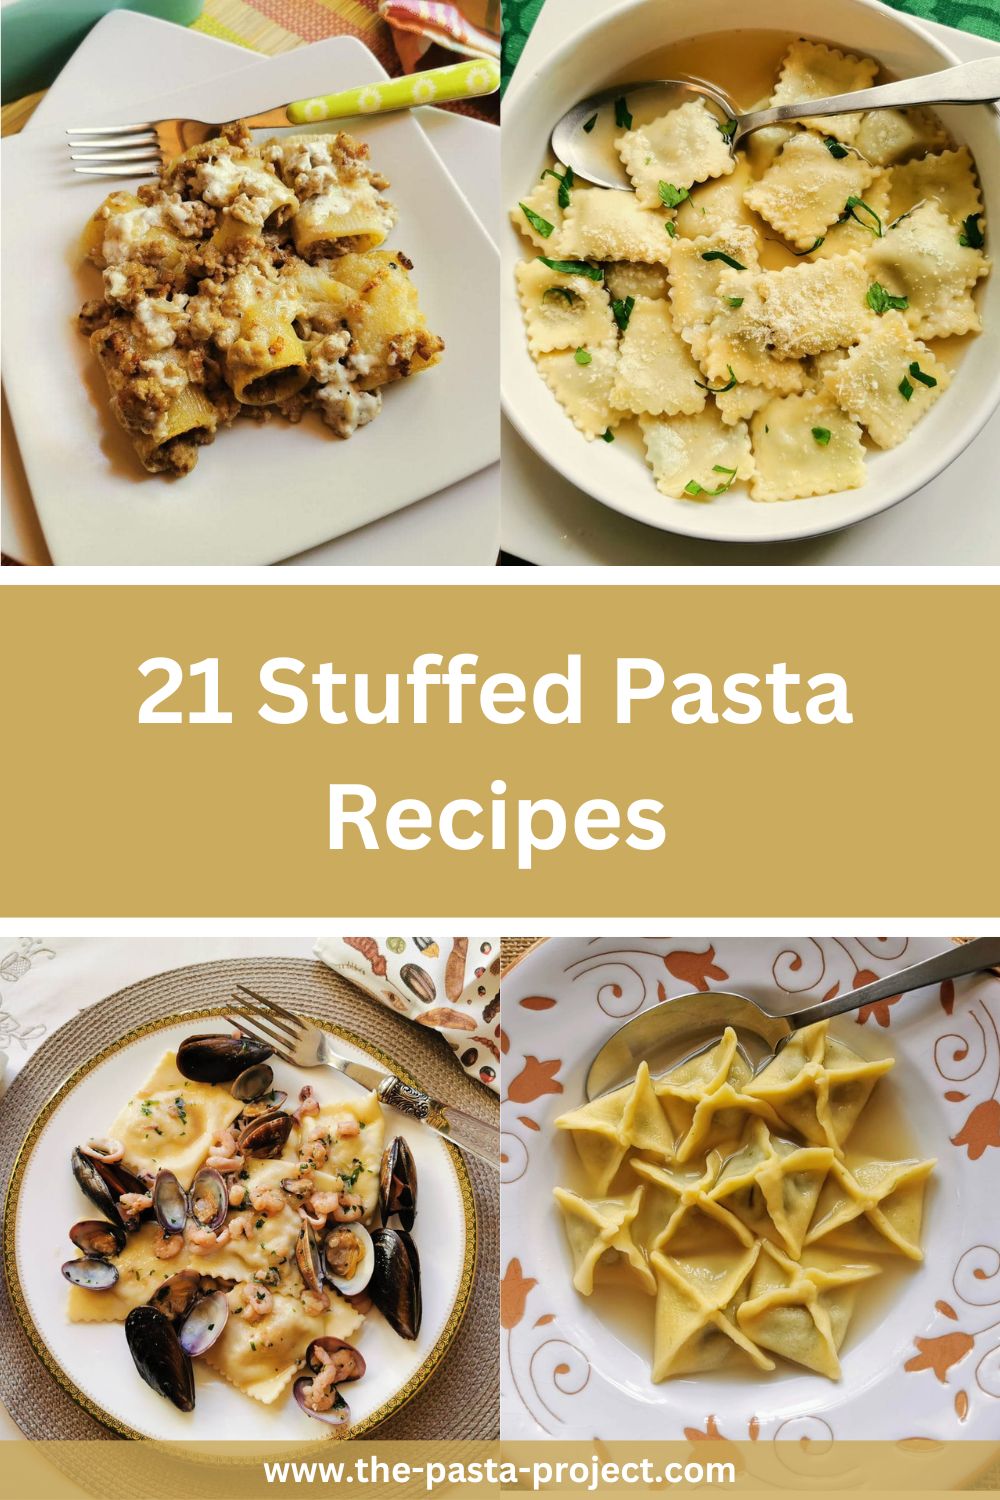 21 Stuffed Pasta Recipes